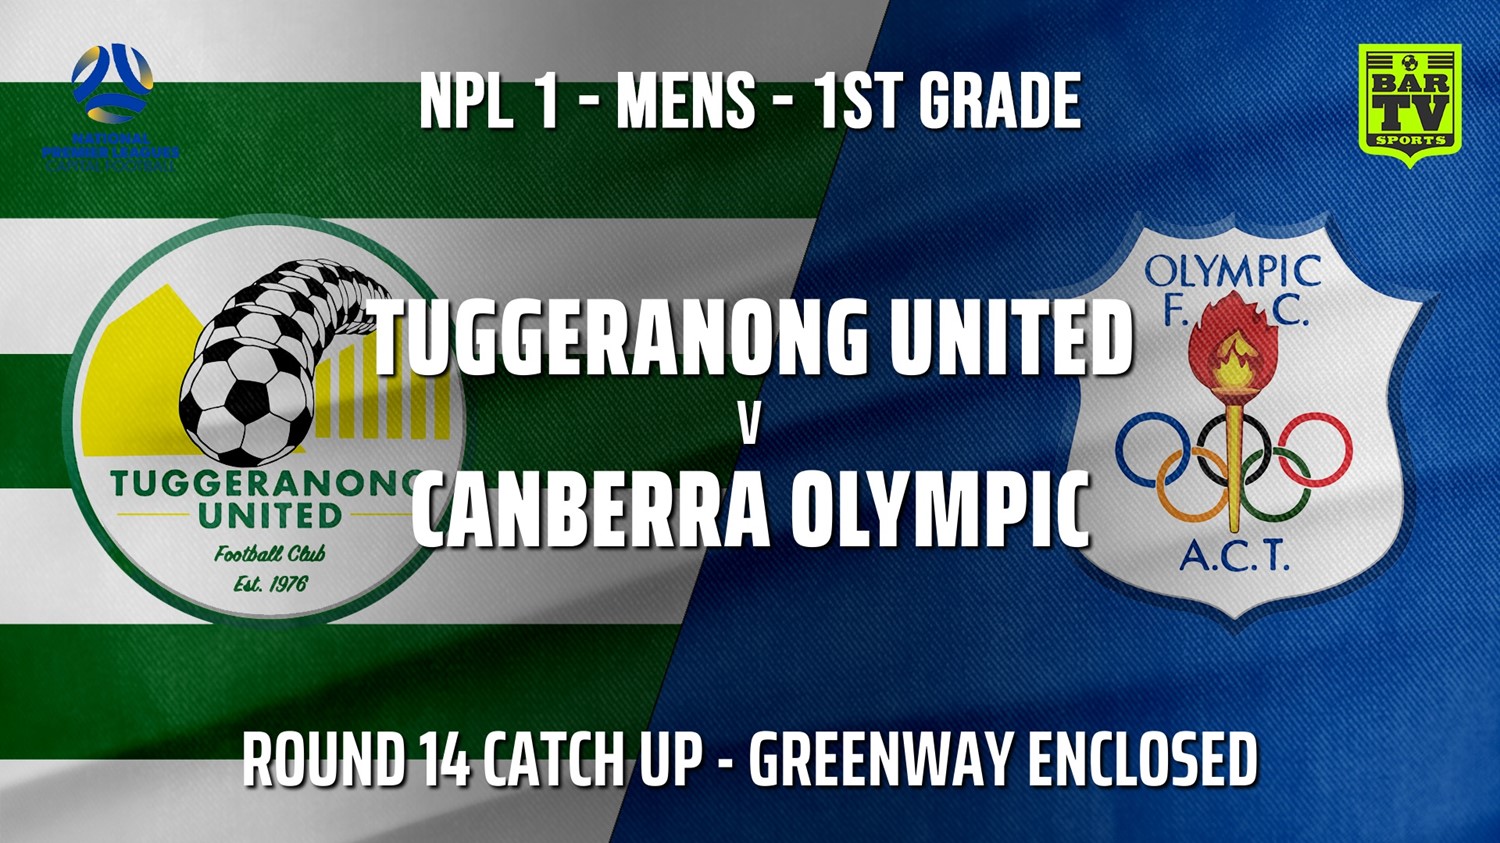 210810-Capital NPL Round 14 Catch Up - Tuggeranong United FC v Canberra Olympic FC Minigame Slate Image